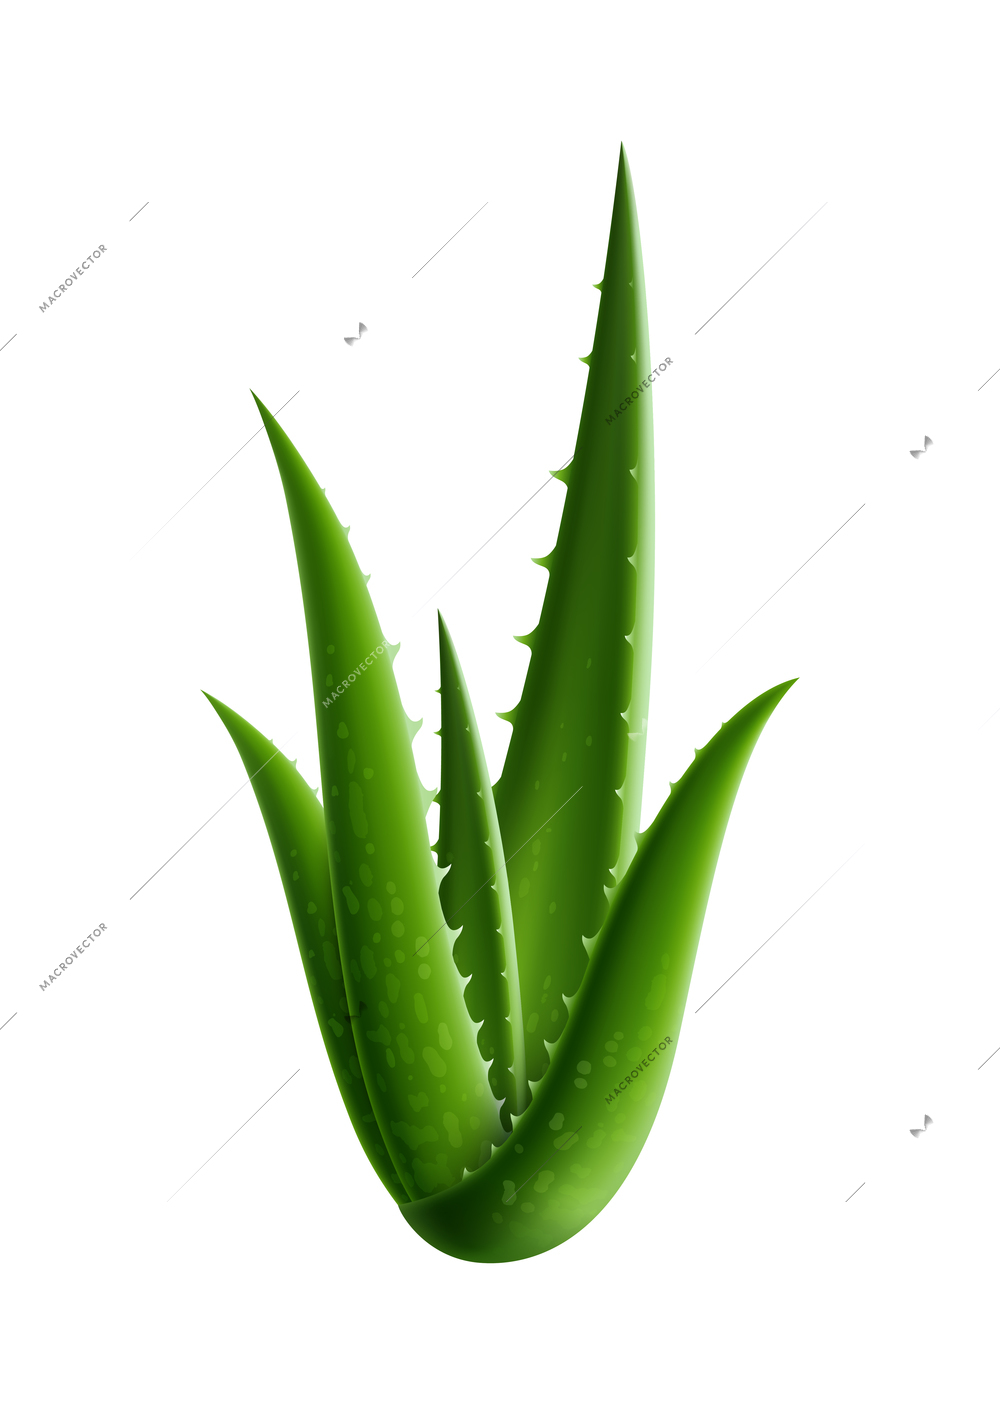 Realistic green aloe vera leaves on white background vector illustration